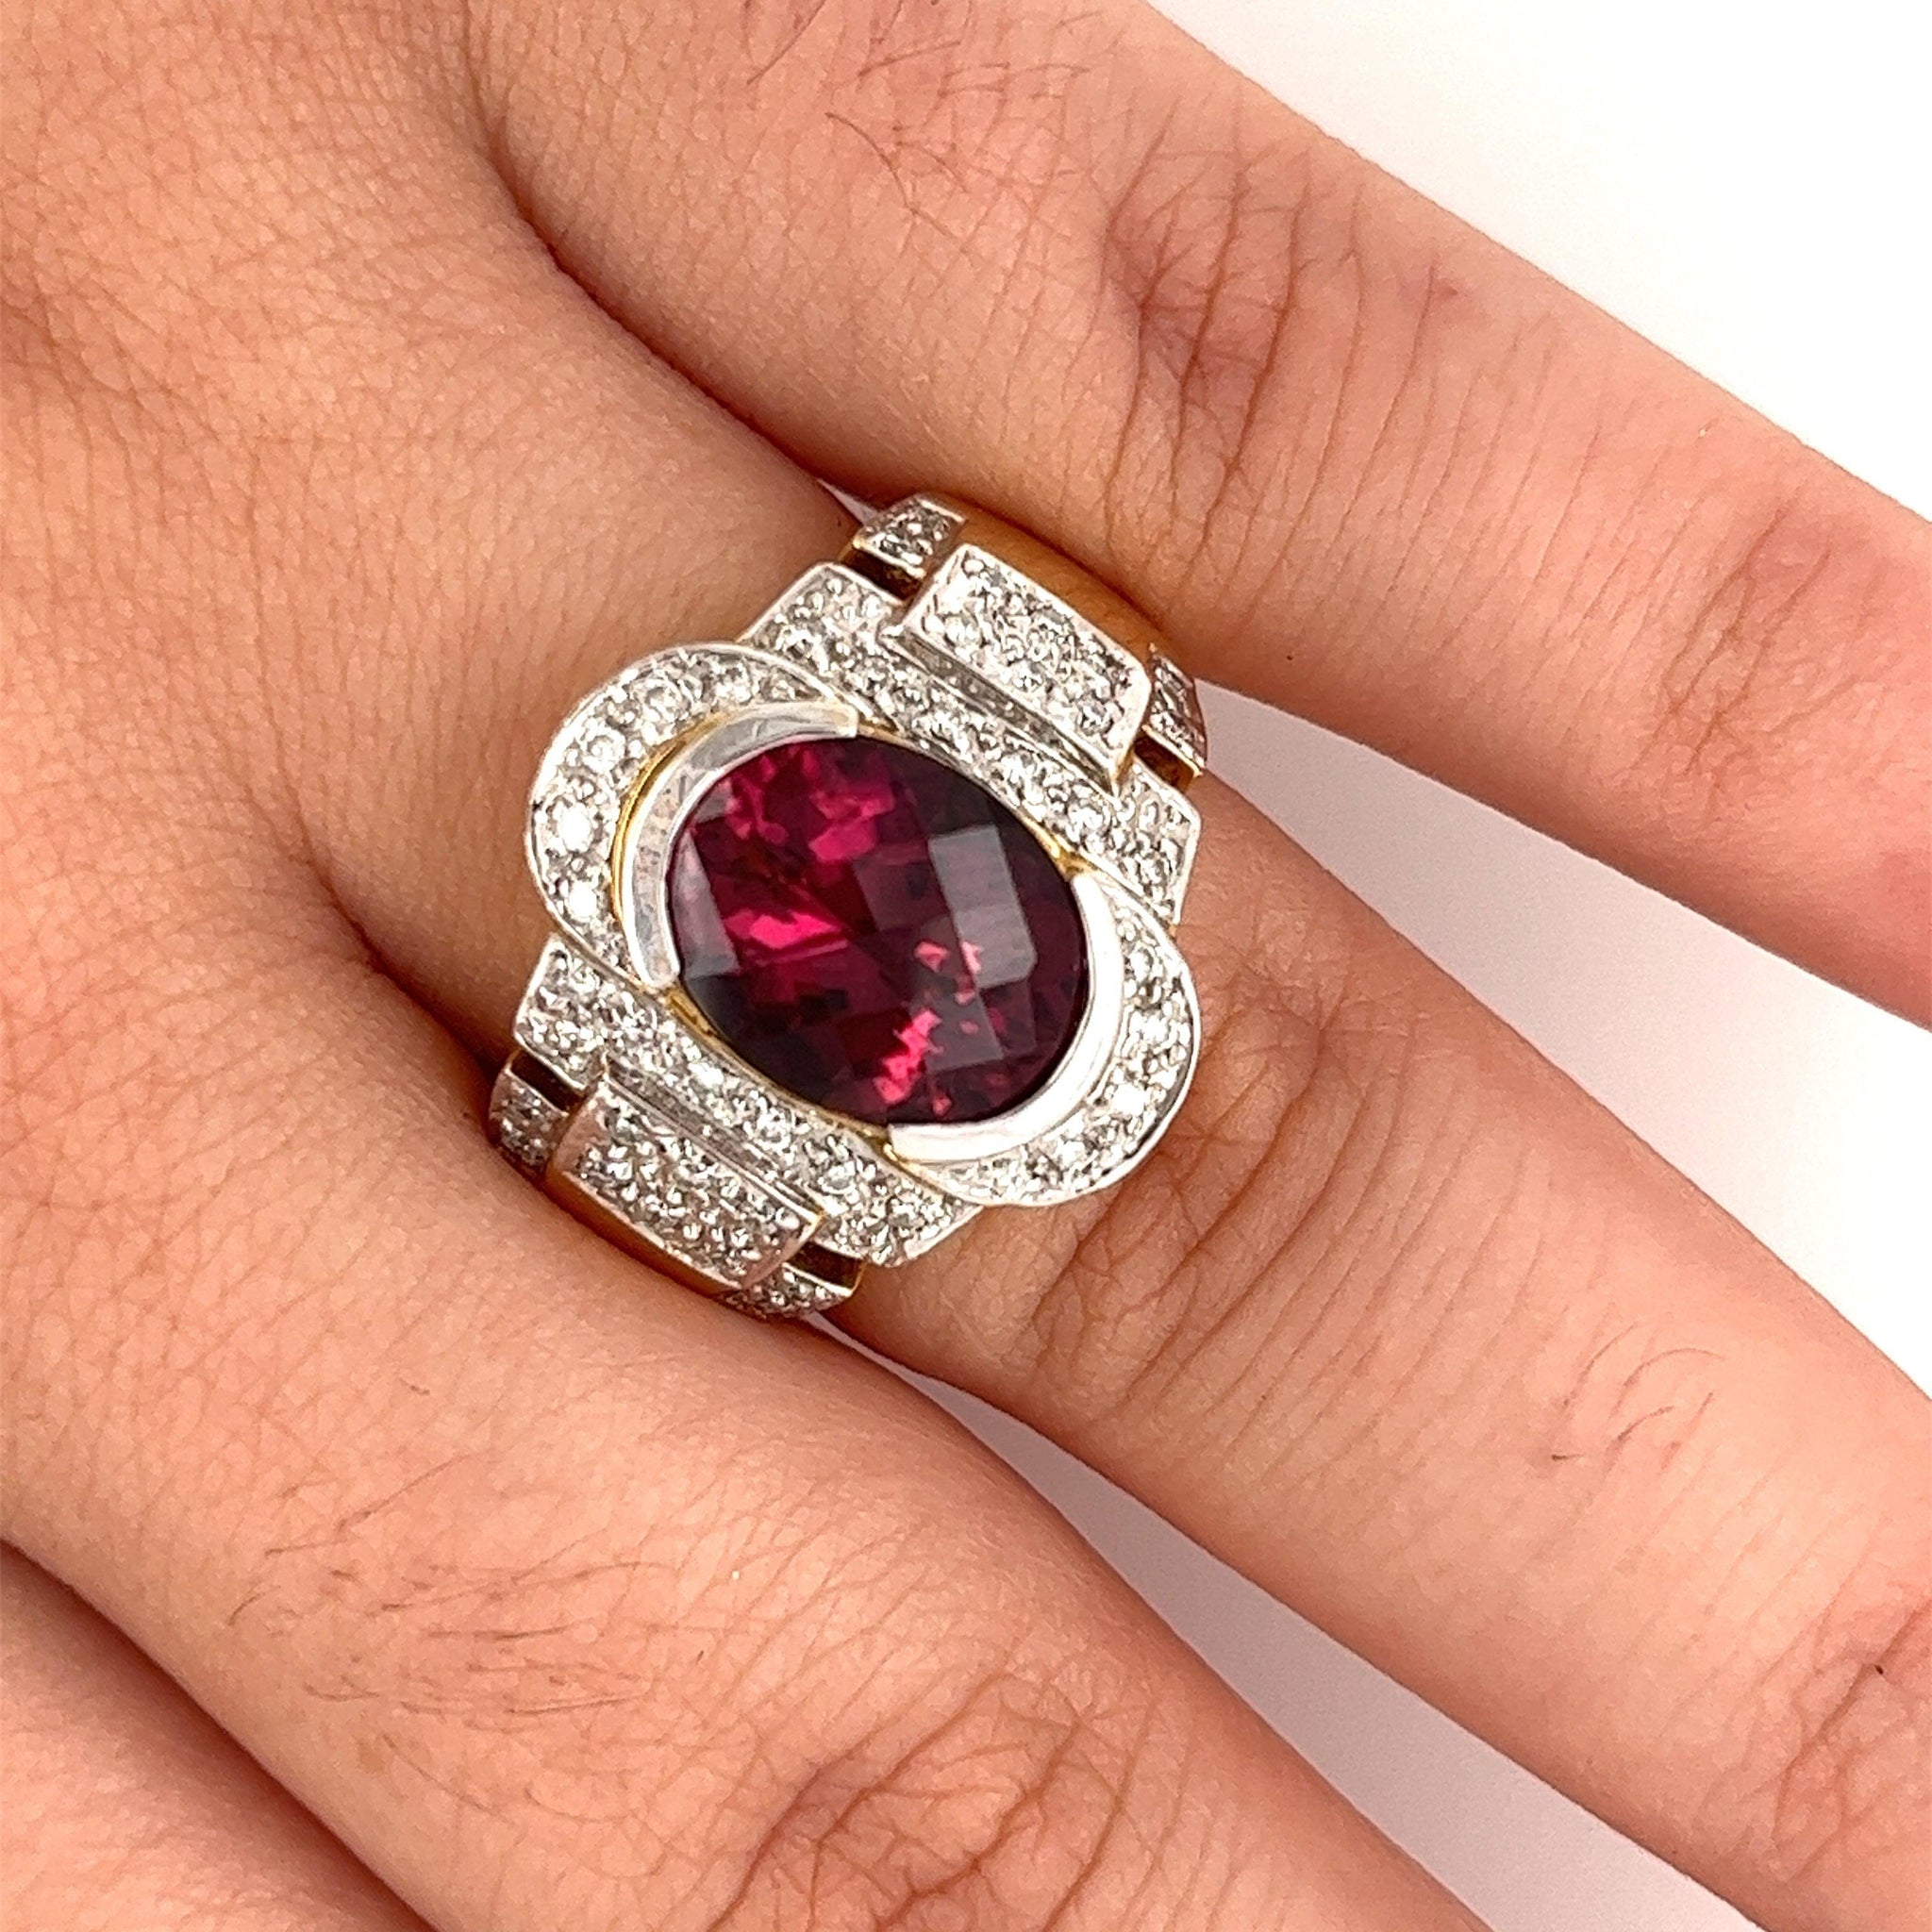 Toi-Moi White Opal, Rubellite Tourmaline Diamond Ring | YAEL Designs